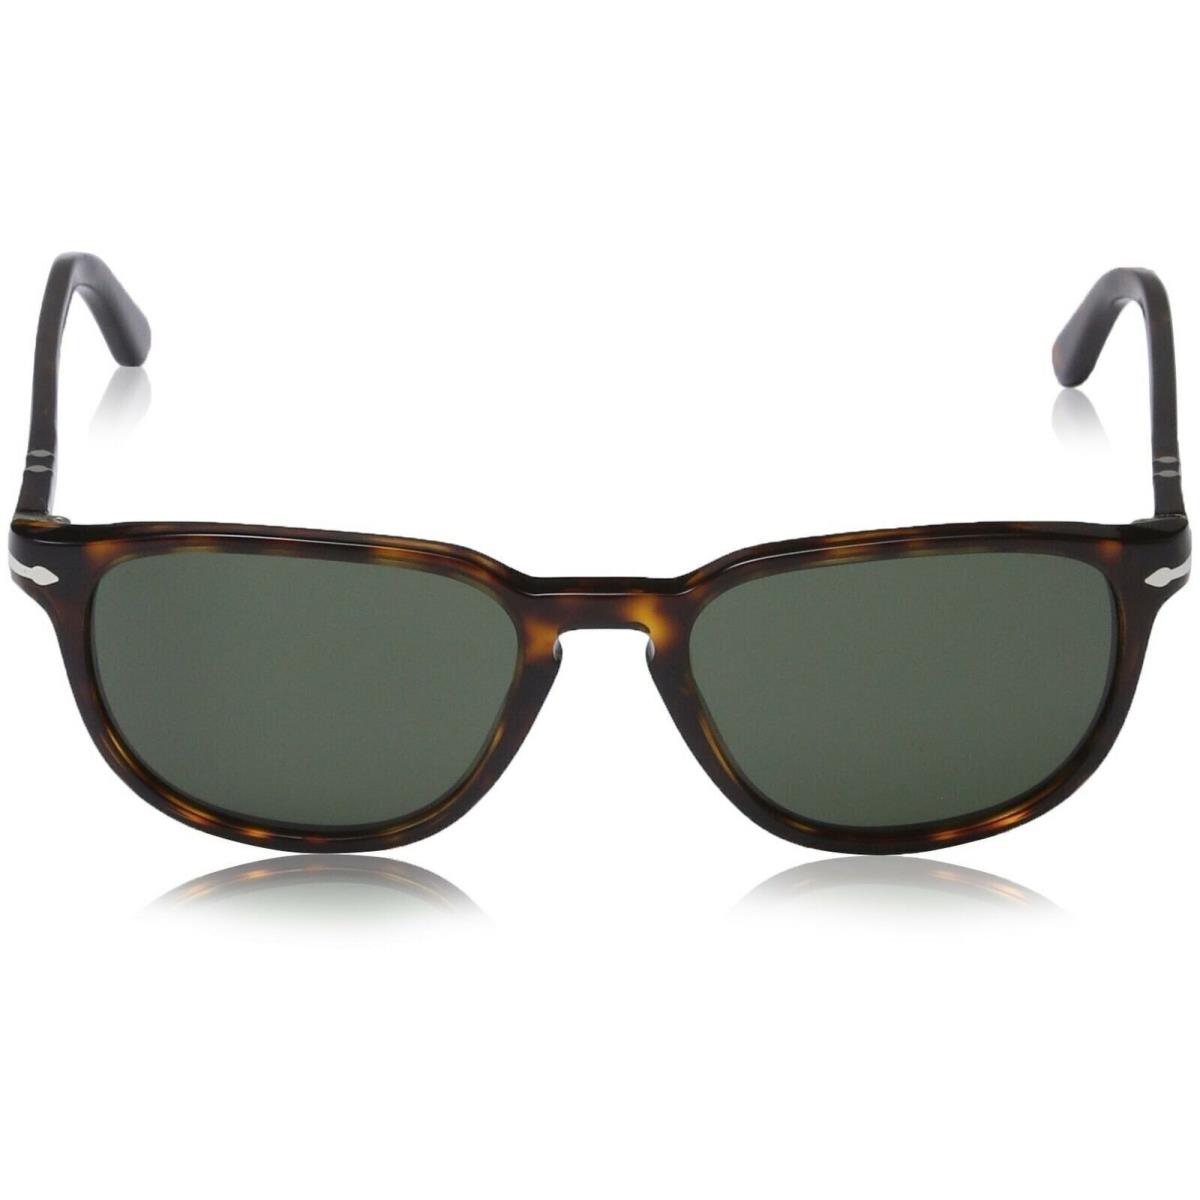 Persol 0PO3019 24/31 52mm Tortoise Oval Sunglasses 52mm